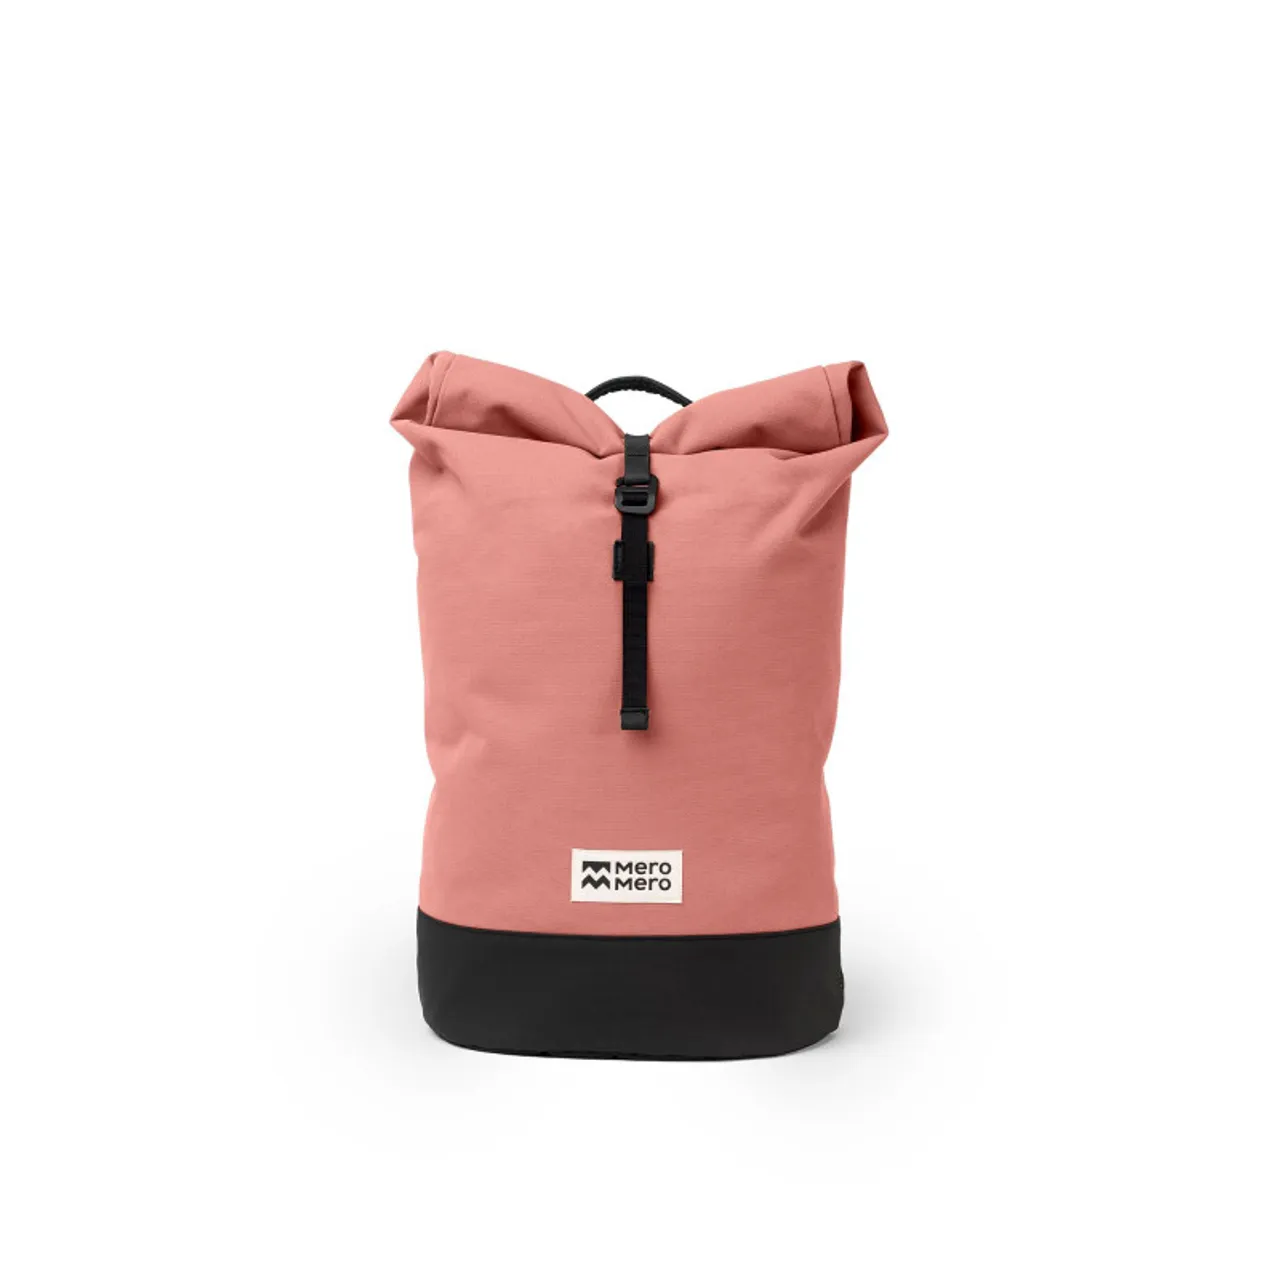 MeroMero Wanaka Bag - Fahrradrucksack Blossom Pink / Black Leather 10 - 15 L